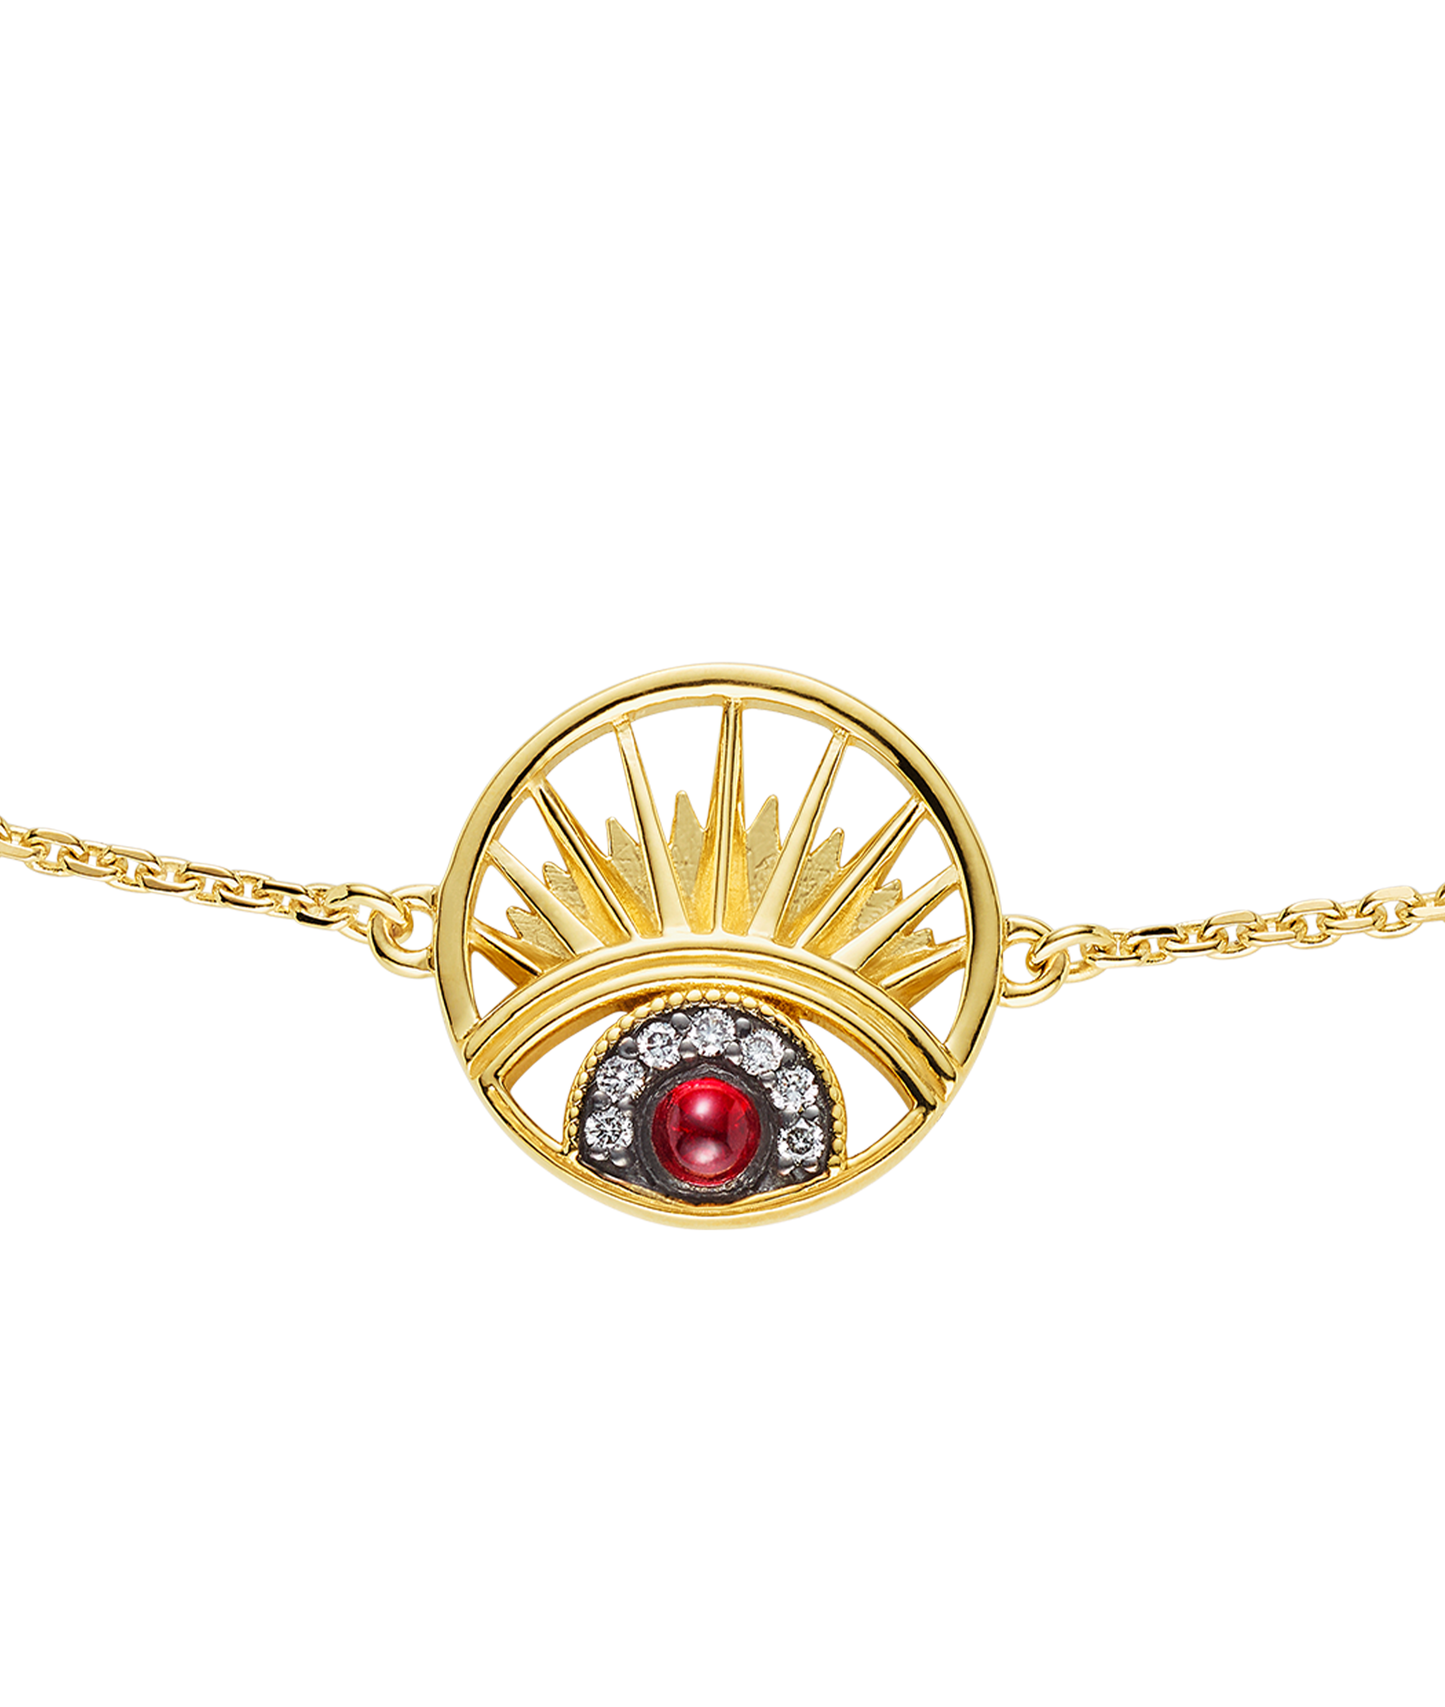 'Keep An Eye On Me' Bracelet Ruby